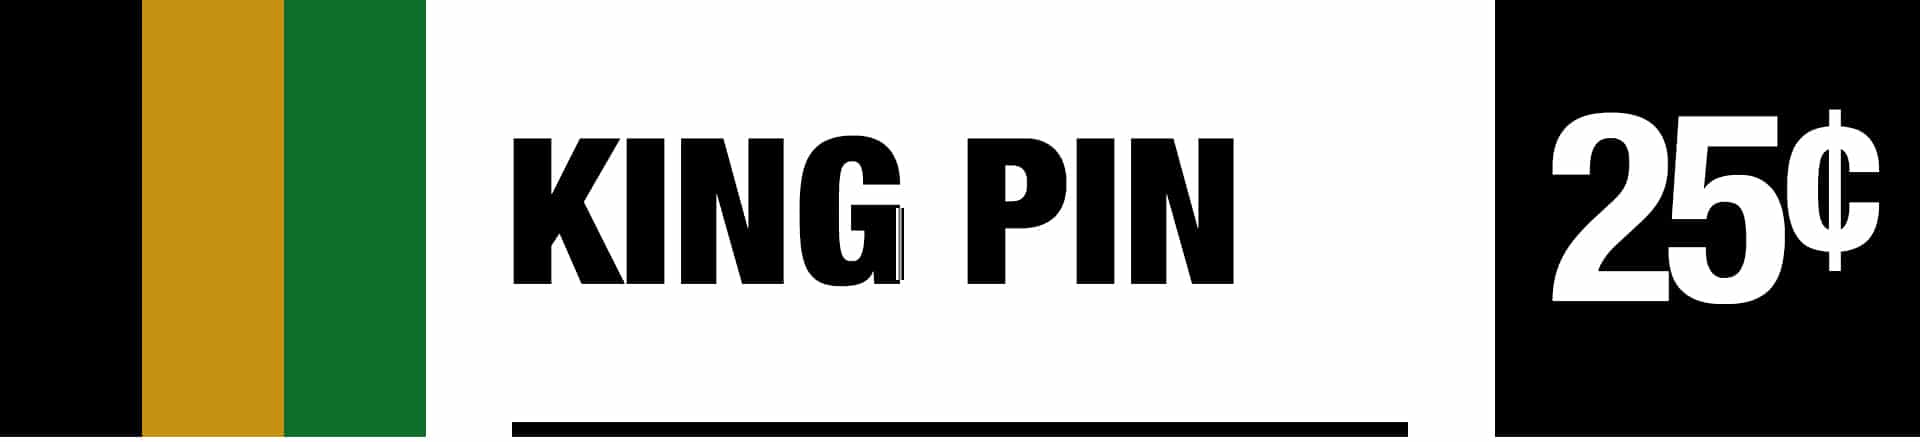 King Pin - Quarter Jackpot